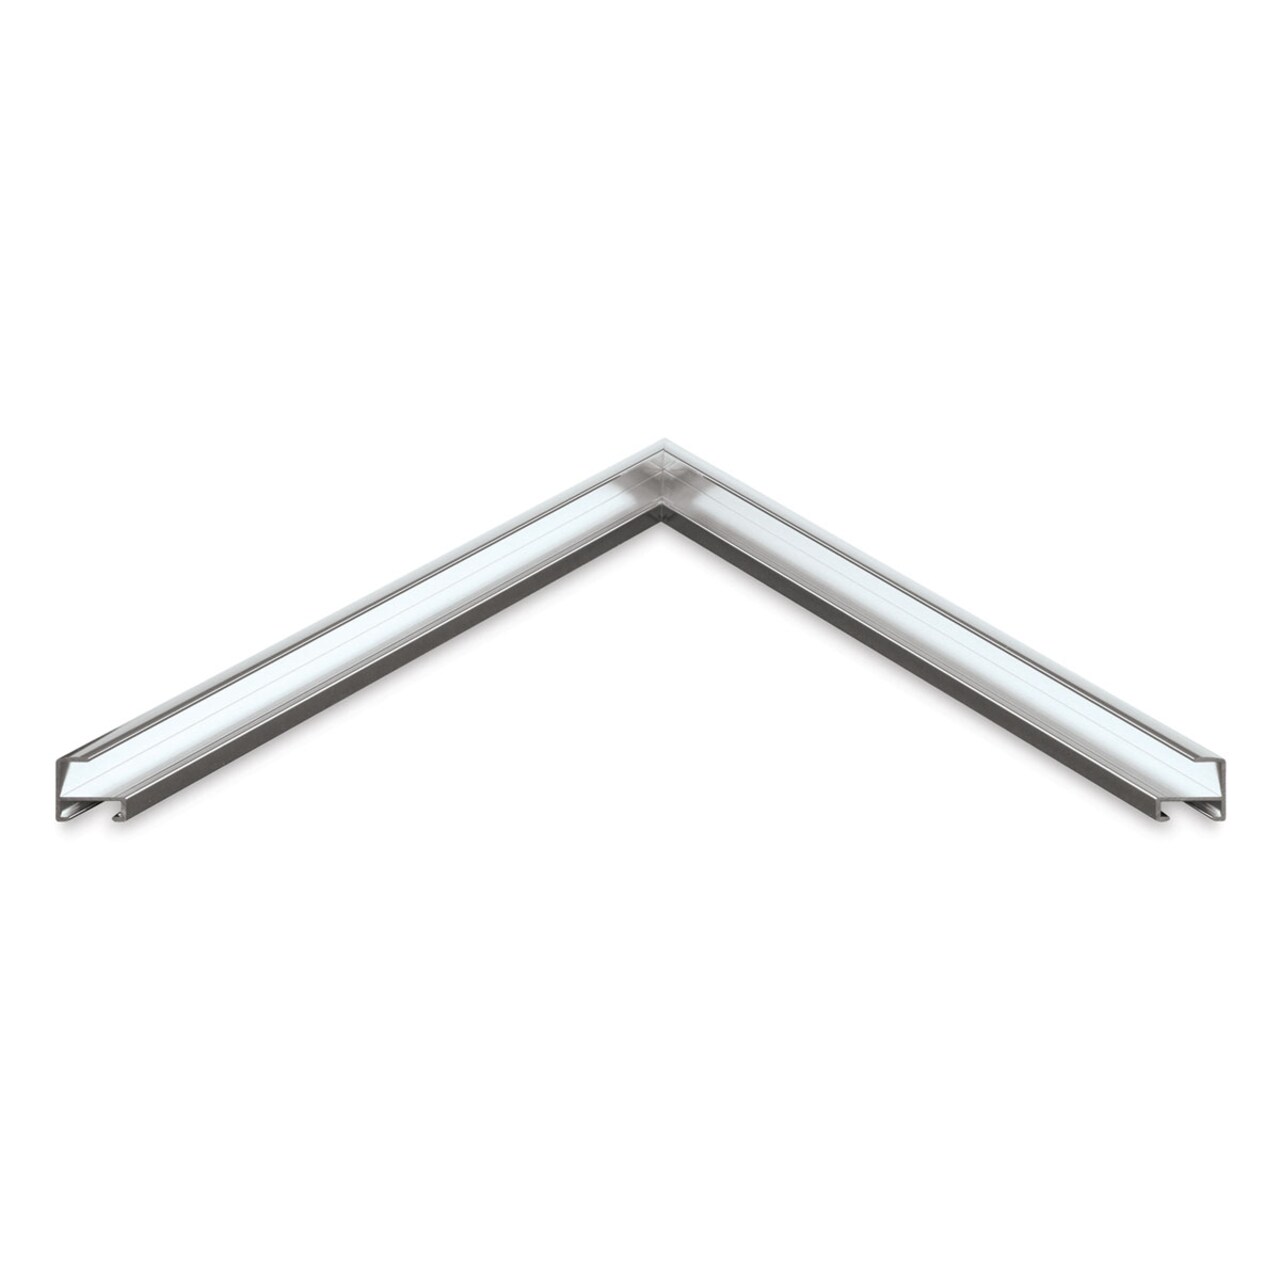 Nielsen Bainbridge Metal Frame Kit-16&#x201D; x 7/16&#x201D;, Silver, 2 Bars